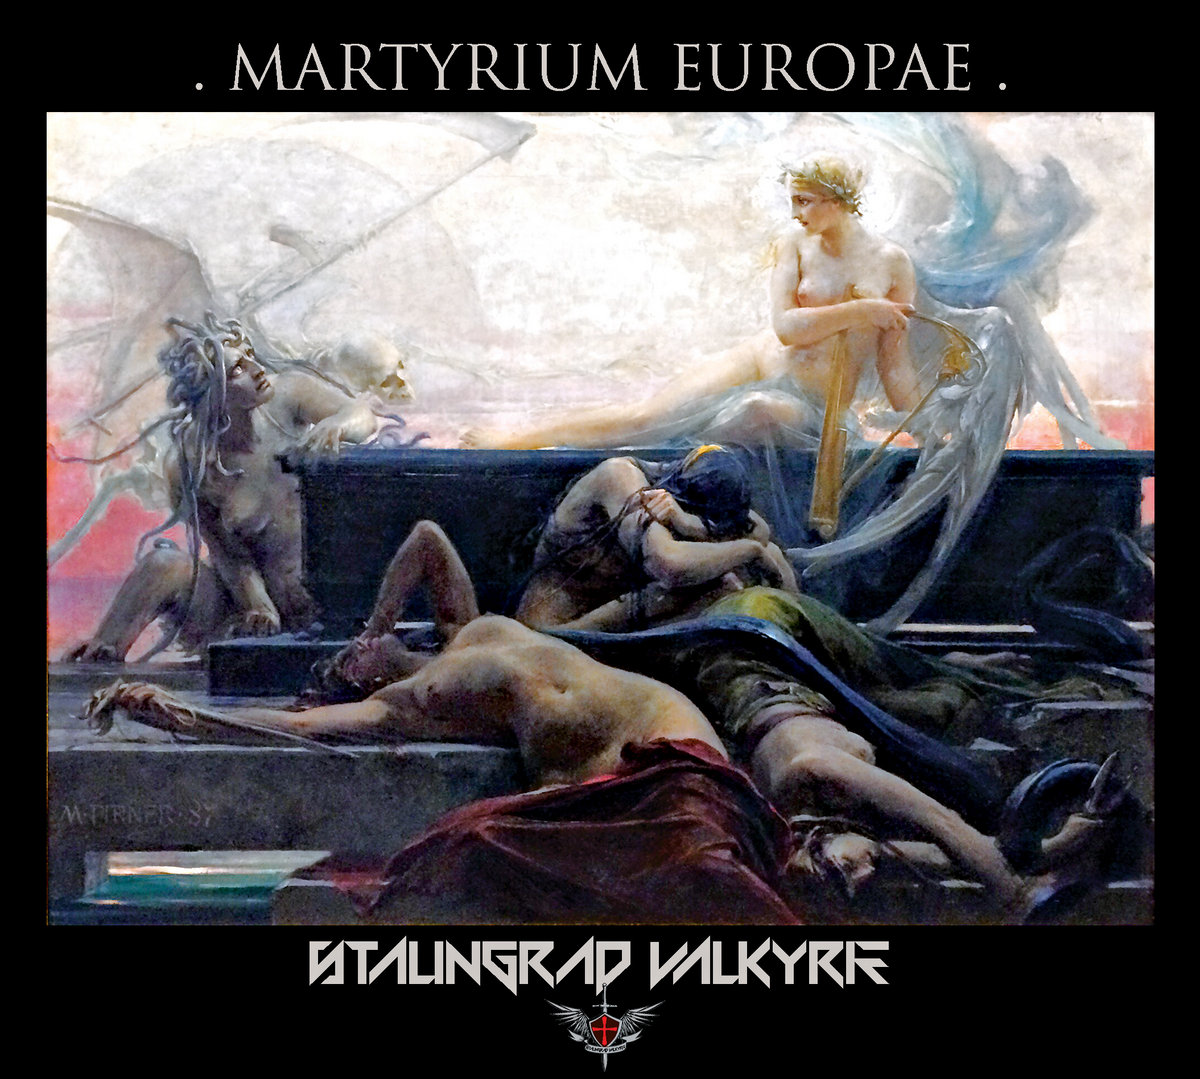 Stalingrad Valkyrie, “Martyrium Europae”